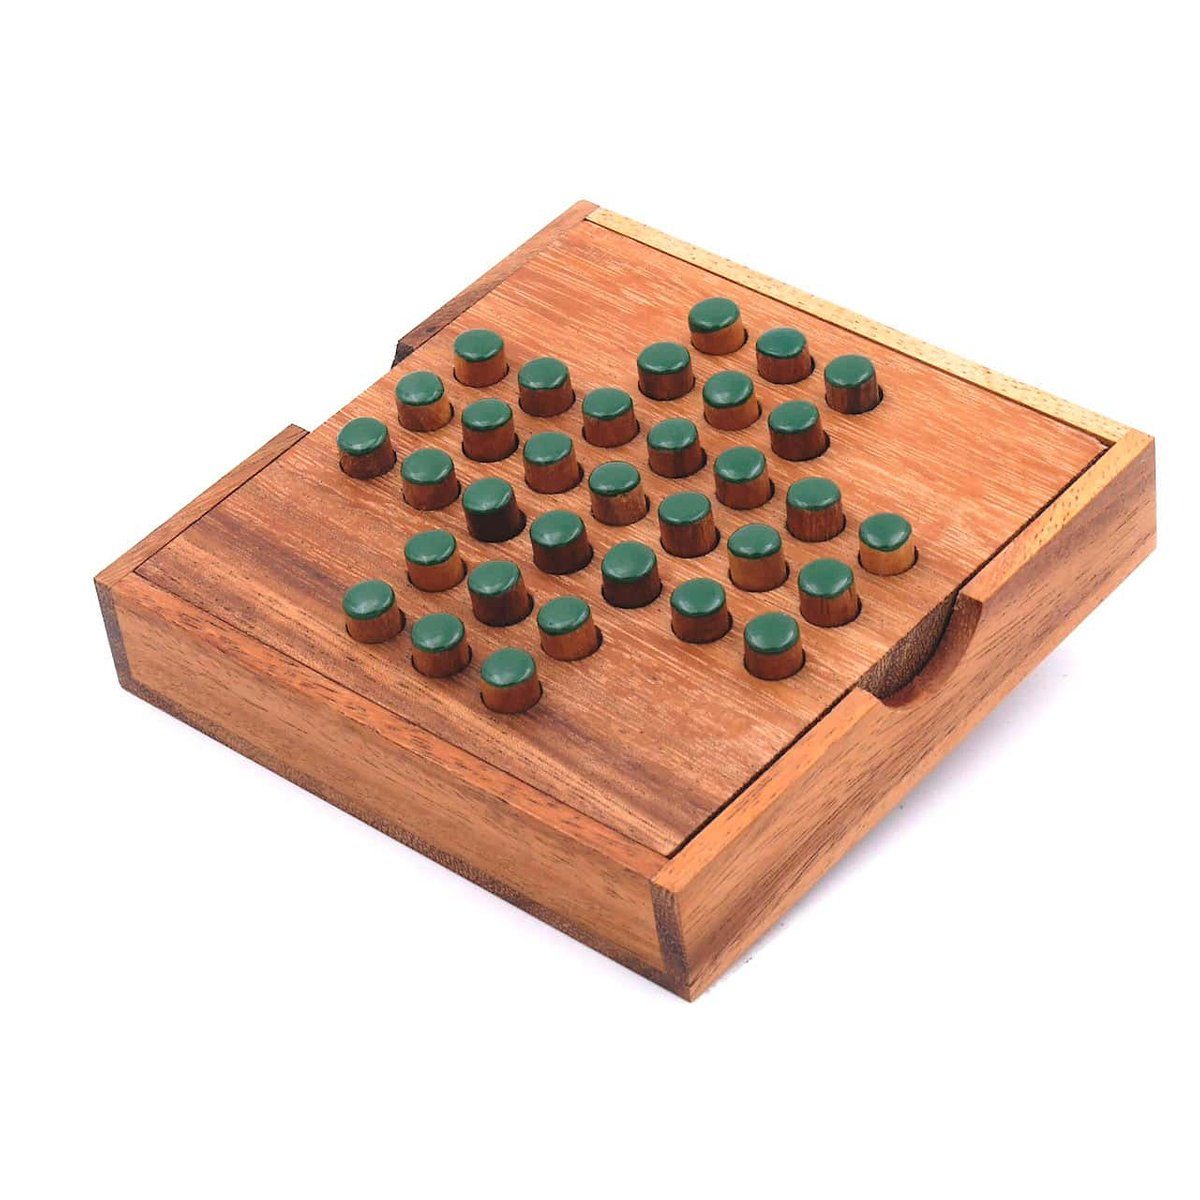 ROMBOL Denkspiele Spiel, Steckspiel Solitaire - unterhaltsamer Klassiker aus edlem Holz, Holzspiel grün